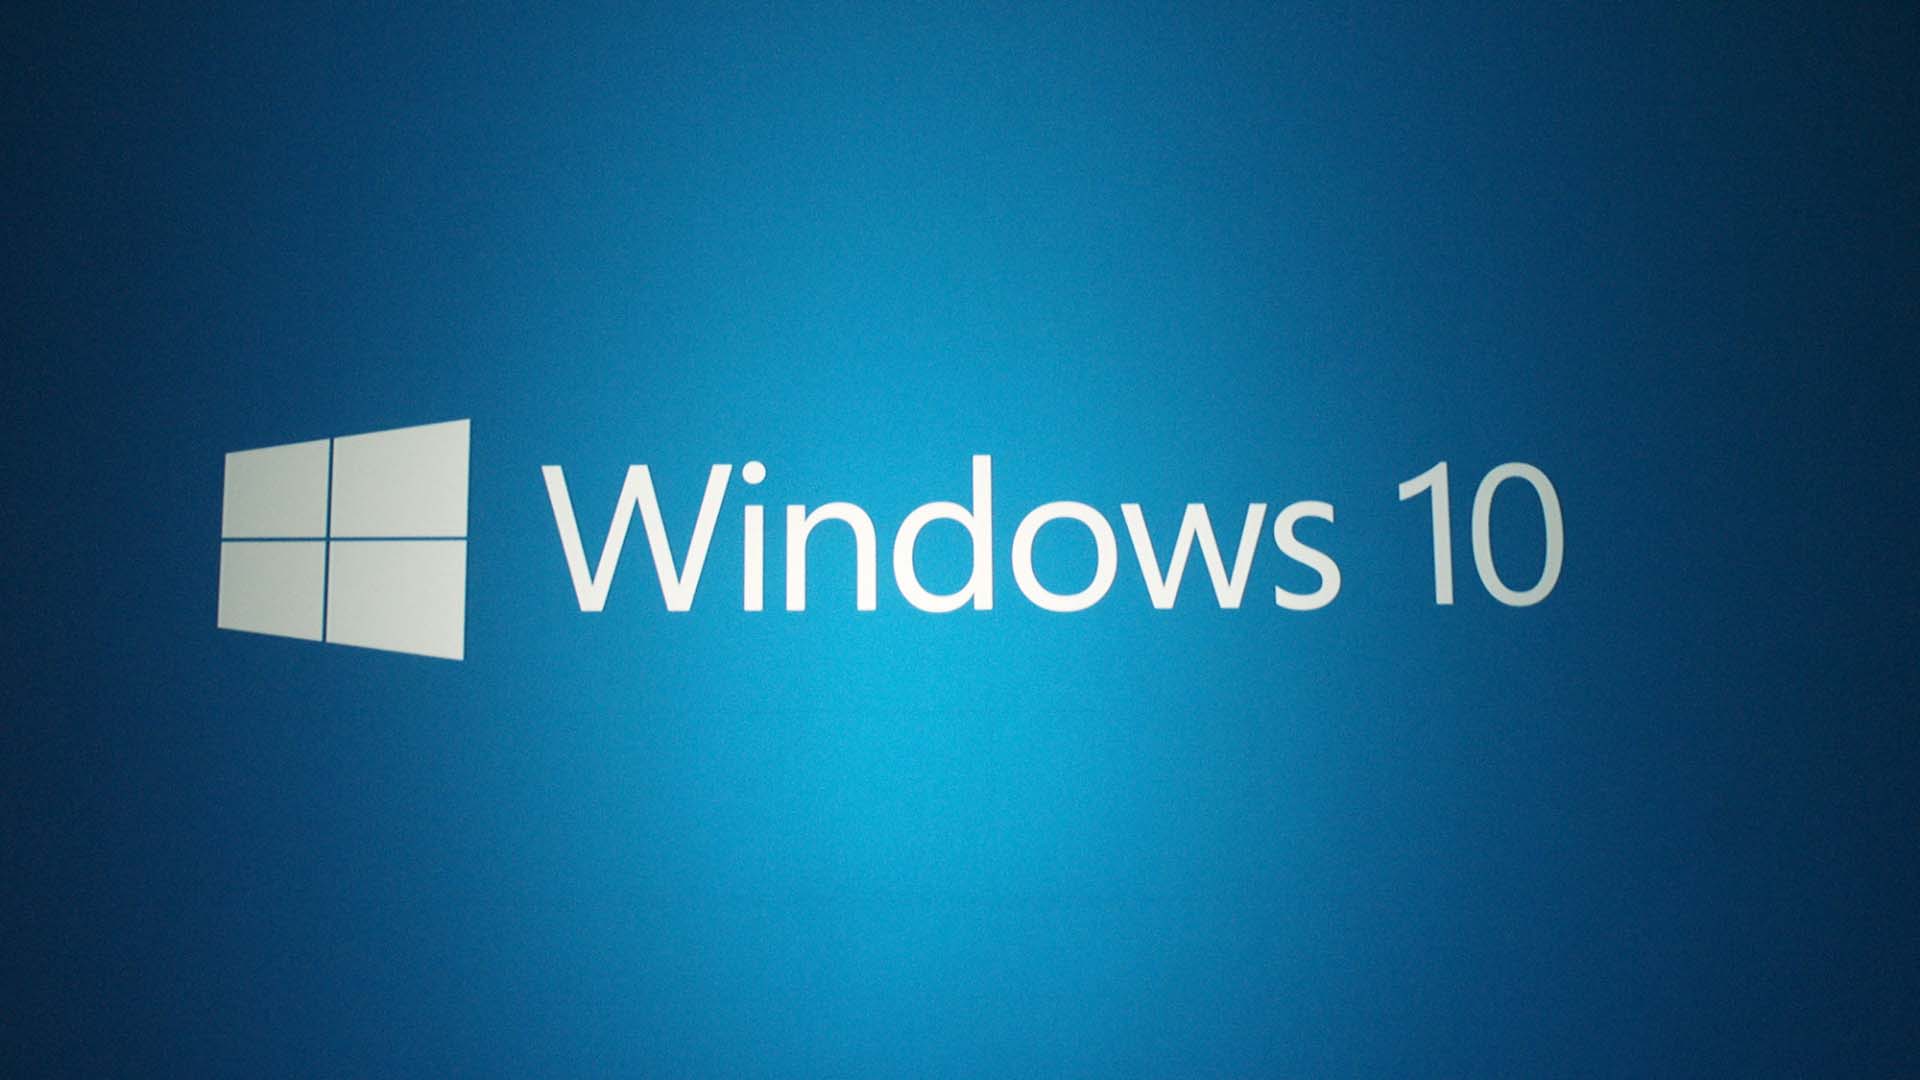 Windows7 - Windows 7 hình nền (31771484) - fanpop